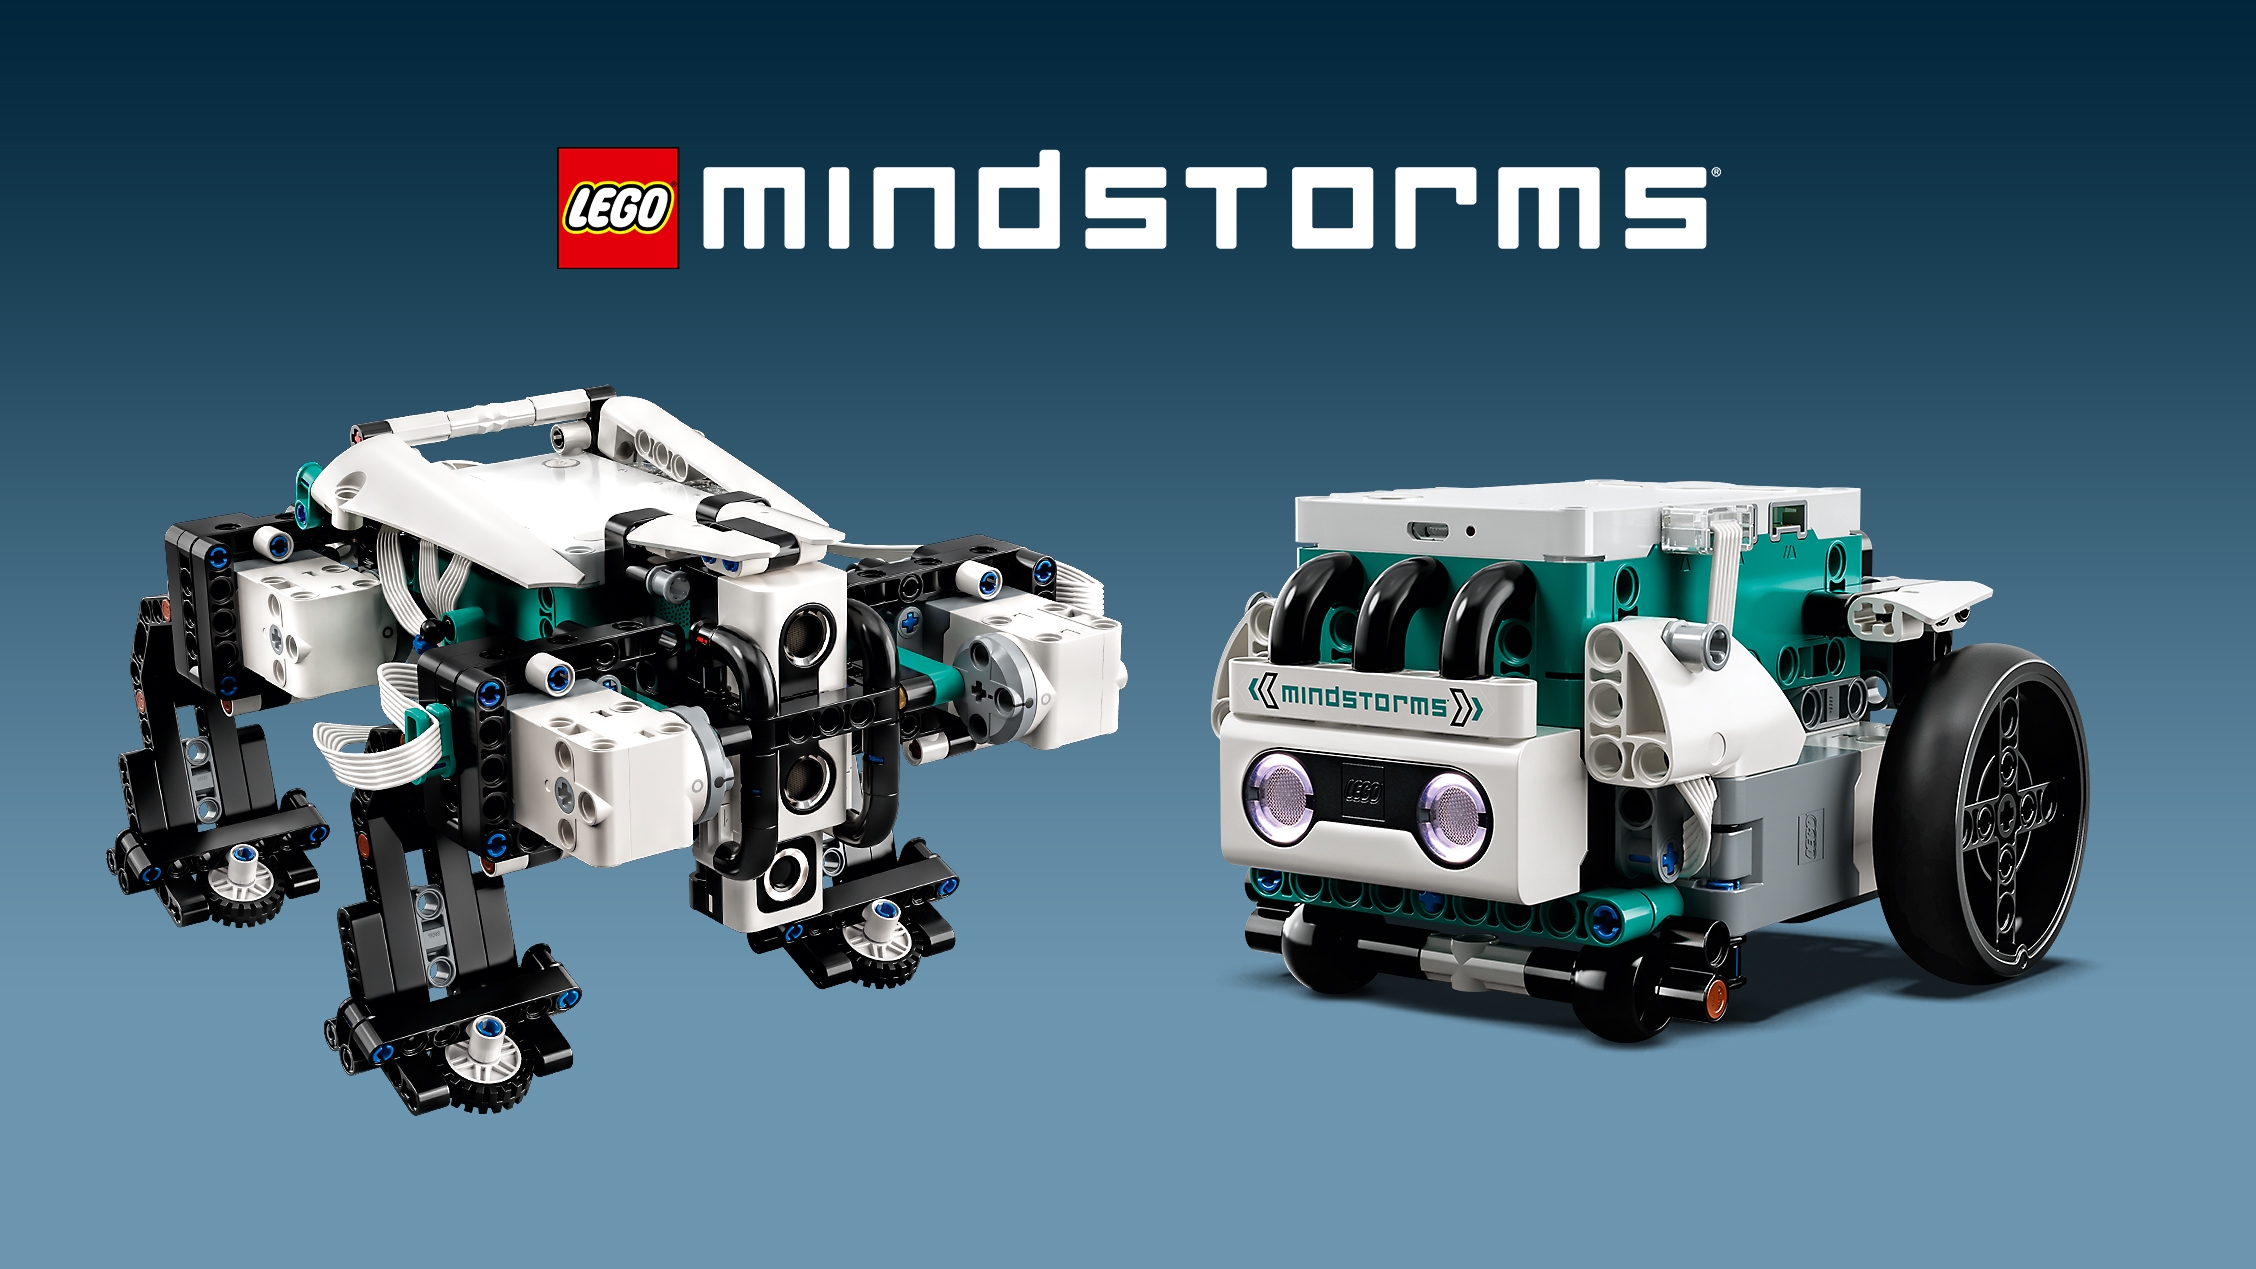 LEGO® MINDSTORMS® Build fun stuff with LEGO® bricks